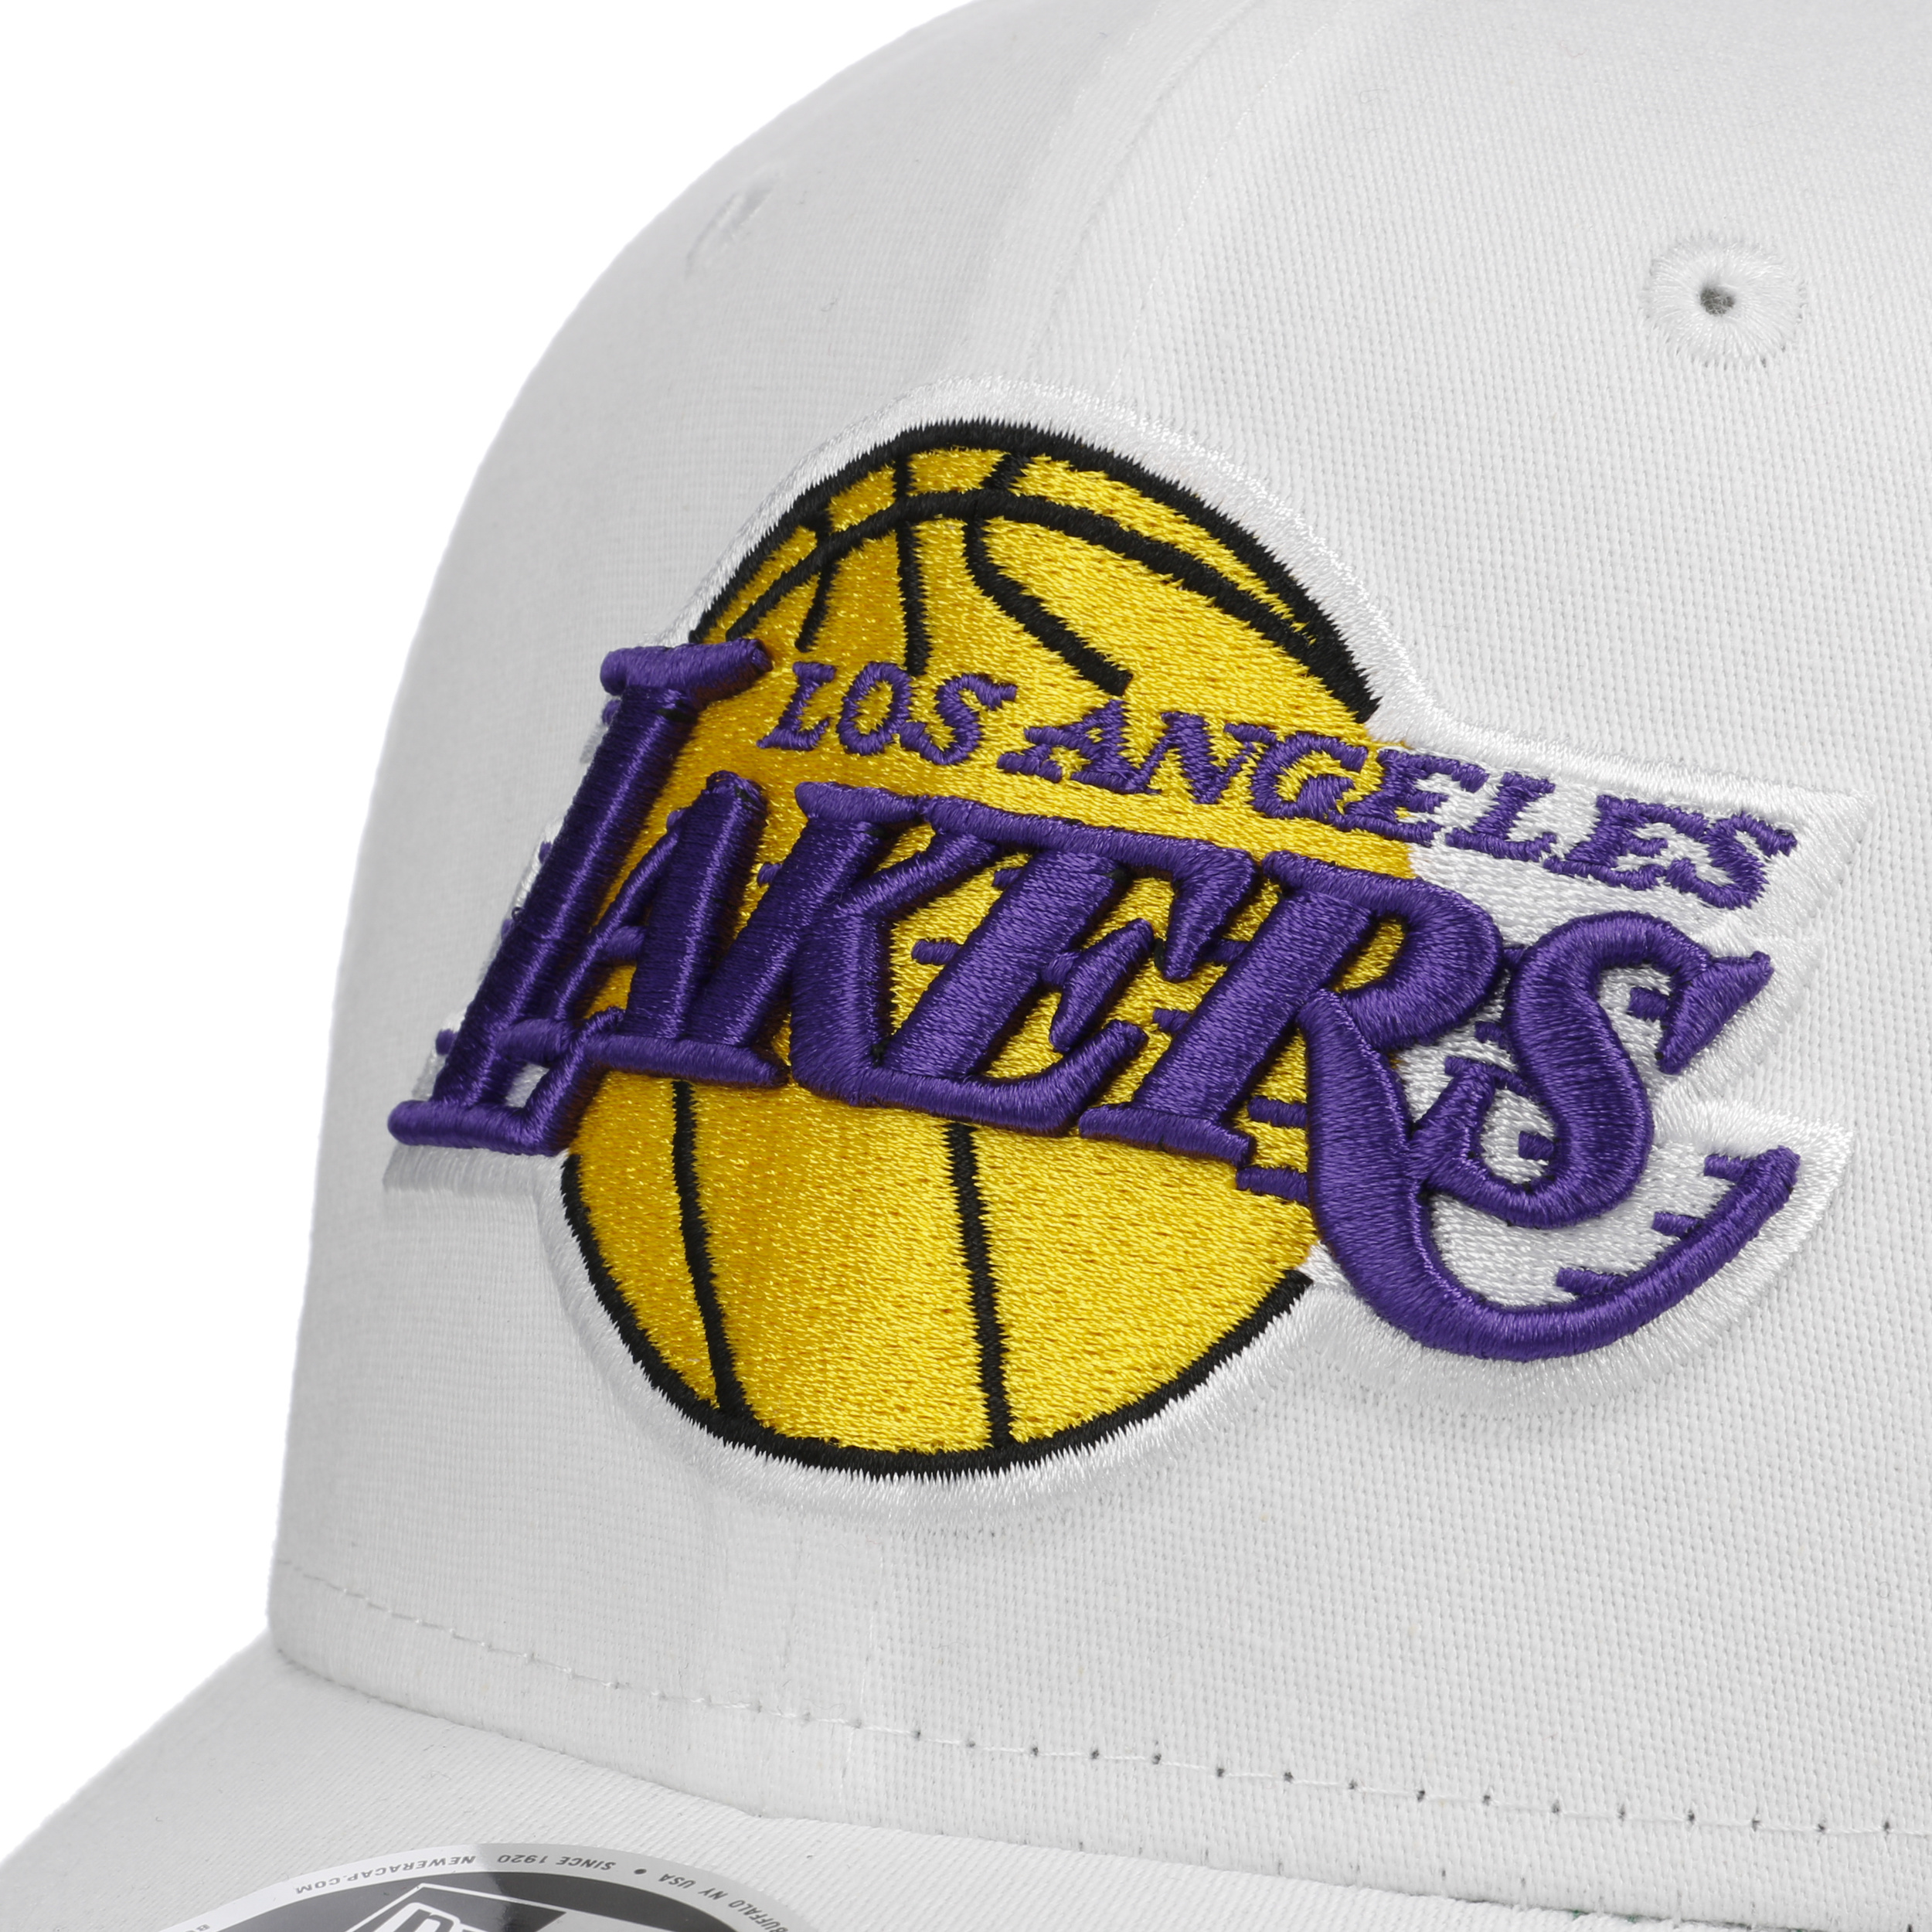 Los Angeles Lakers New Era Classic 9FIFTY Trucker Snapback Hat - Black